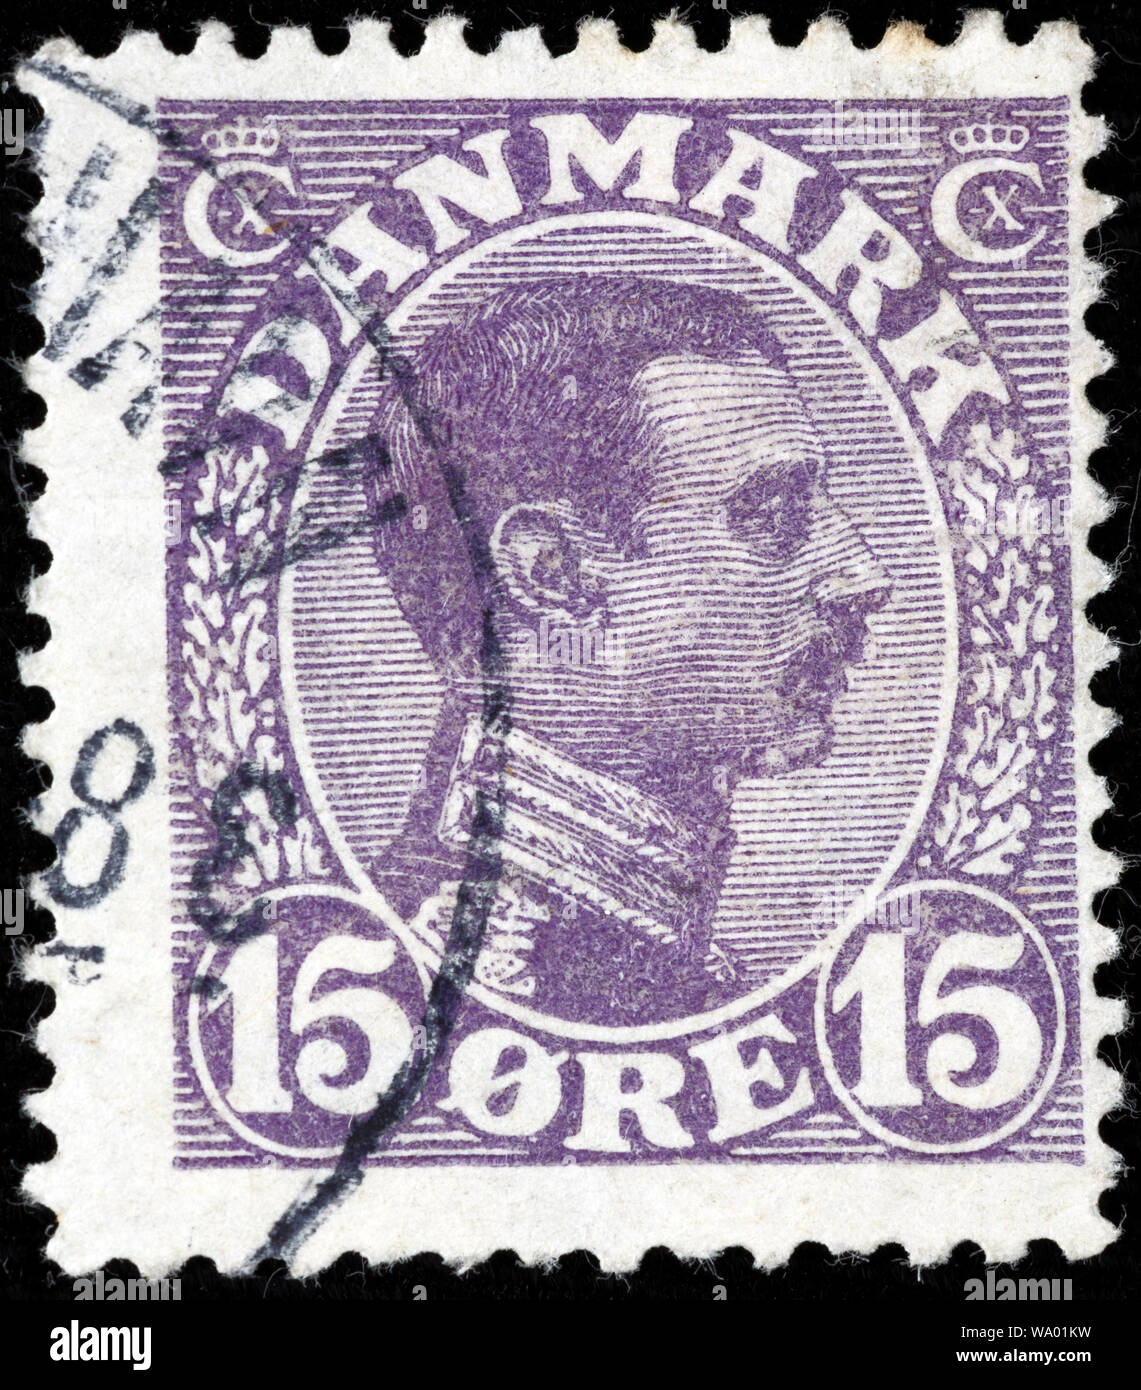 Frederick IX, King of Denmark and Iceland (1947-1972), postage stamp, Denmark, 1913 Stock Photo